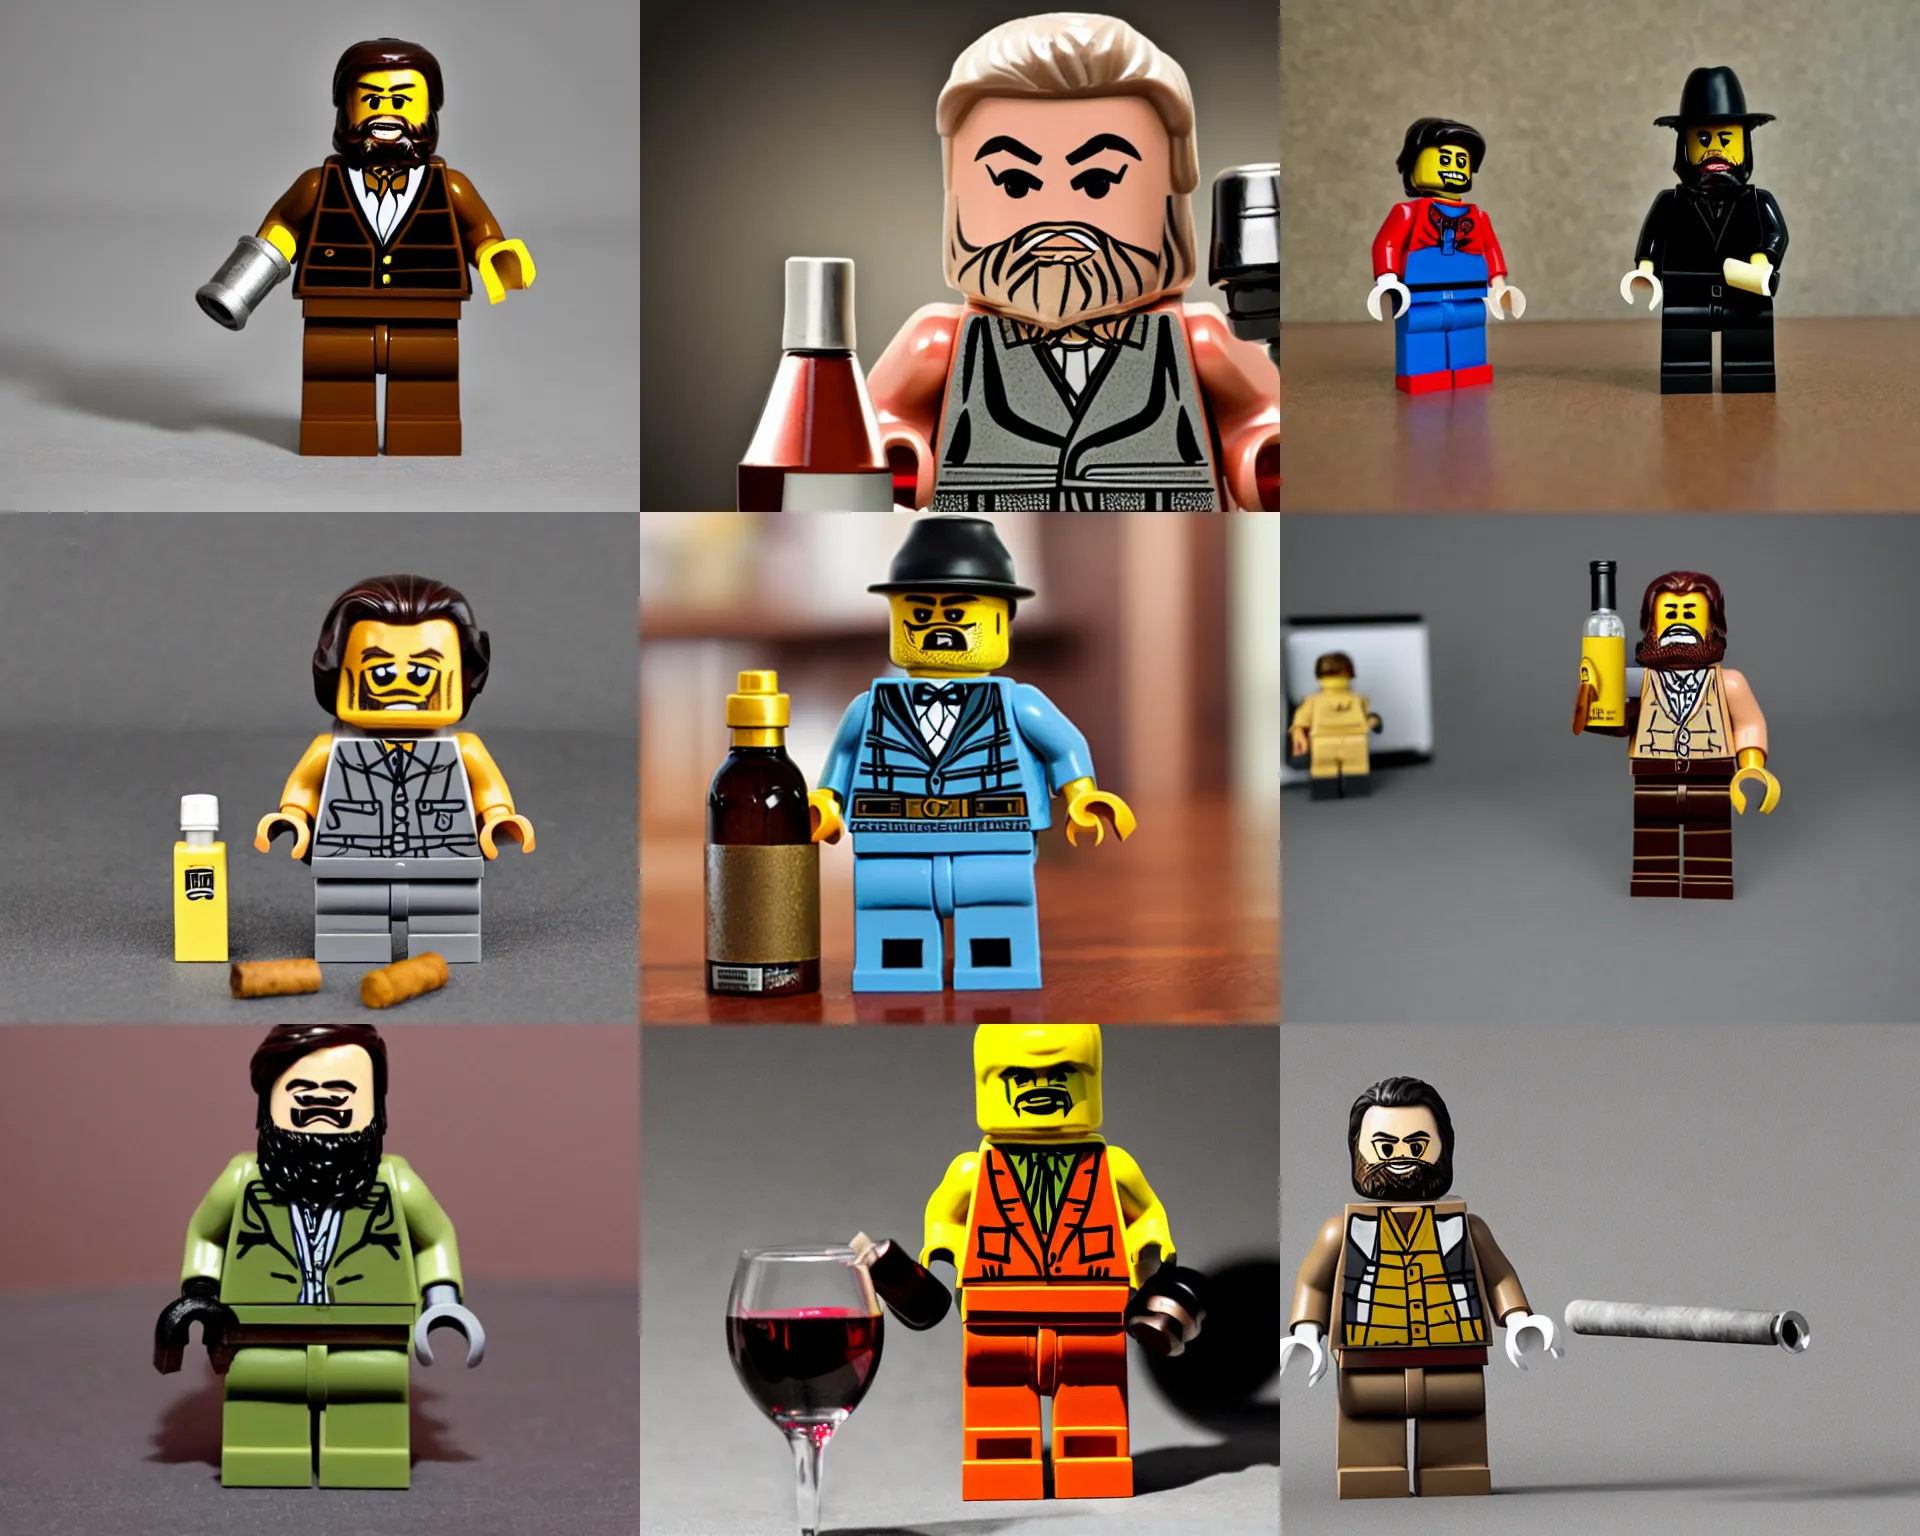 orson welles as lego mini figure, beard, wine bottle, | Stable ...